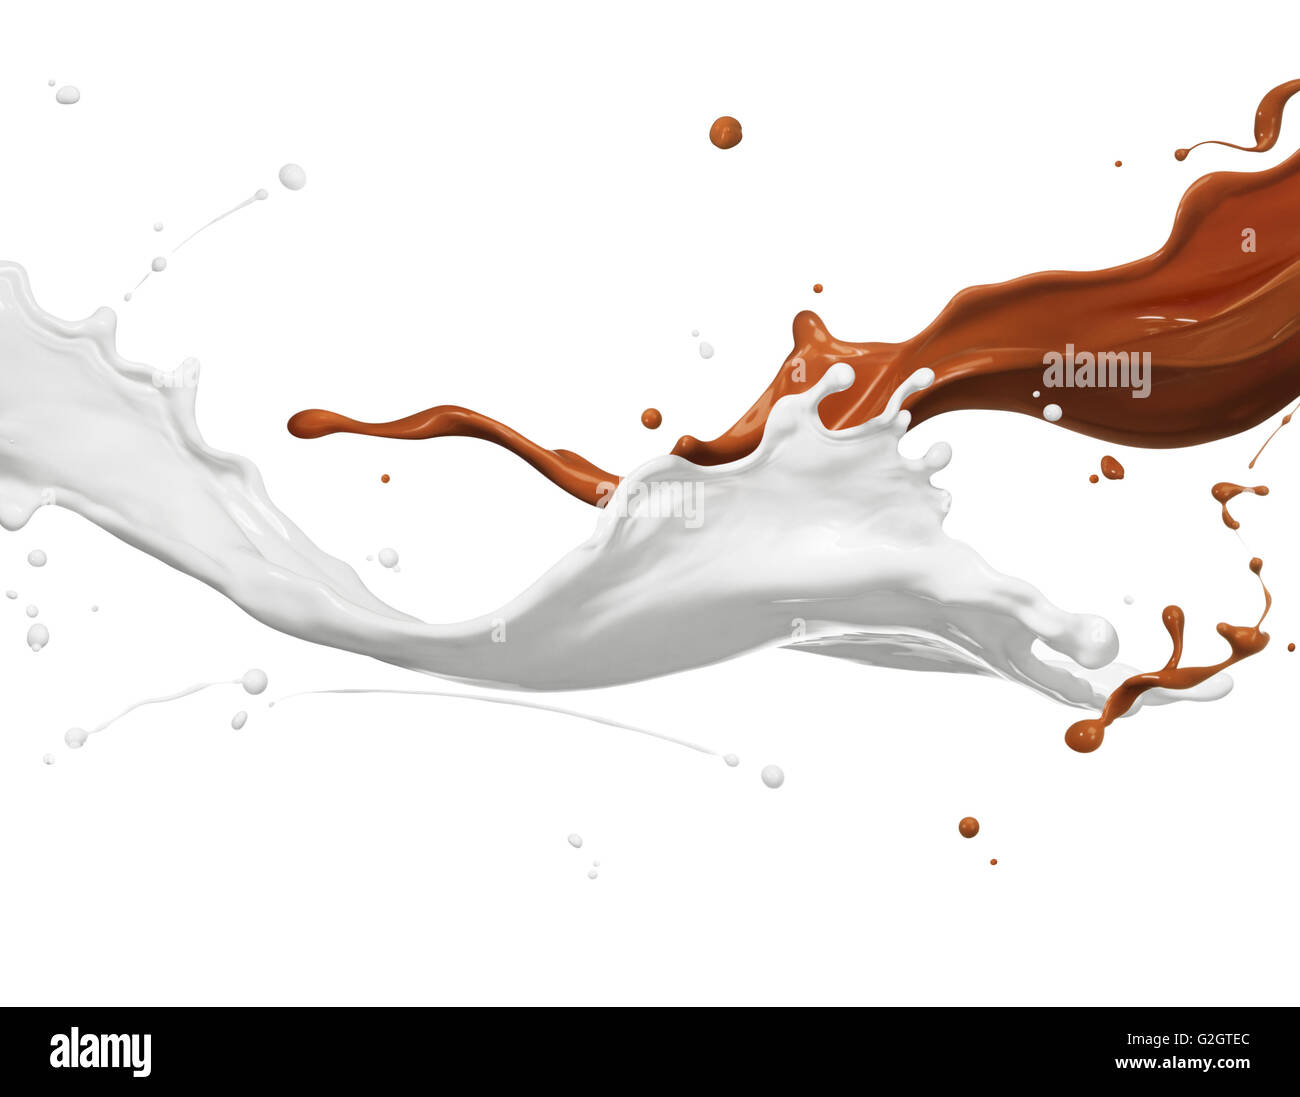 chocolate and milk splashing against white background Stock Photo